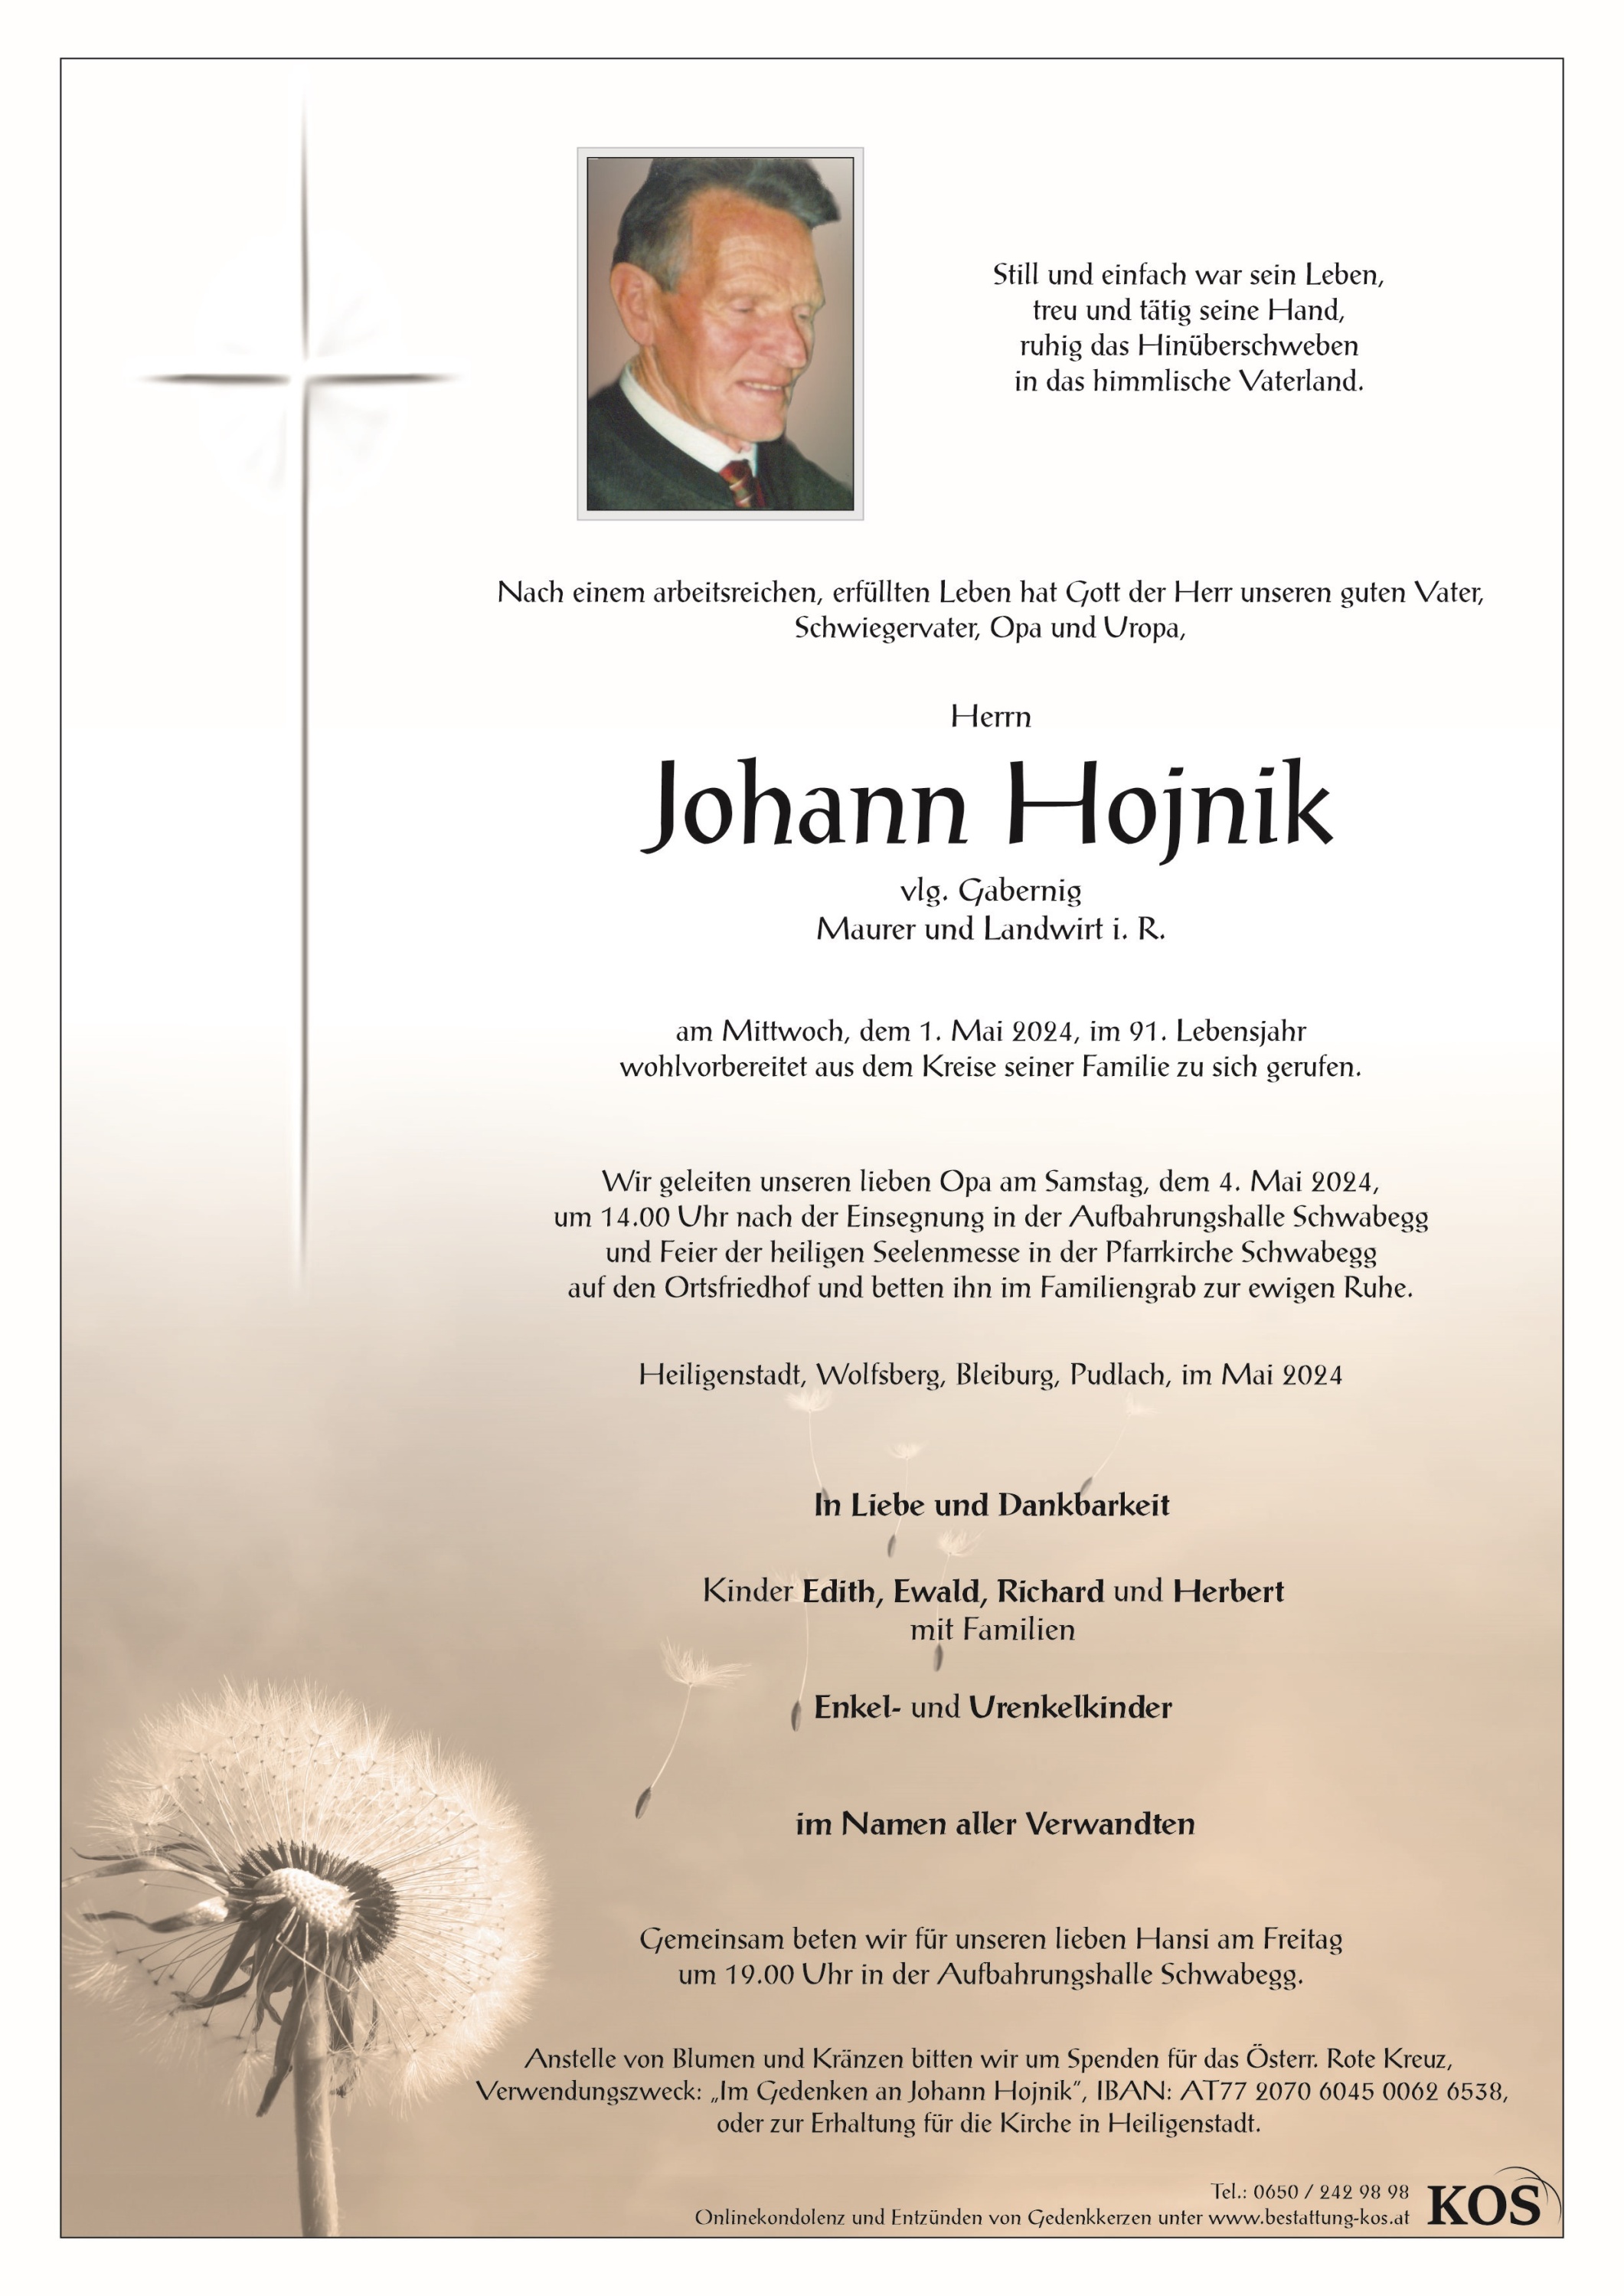 Johann Hojnik